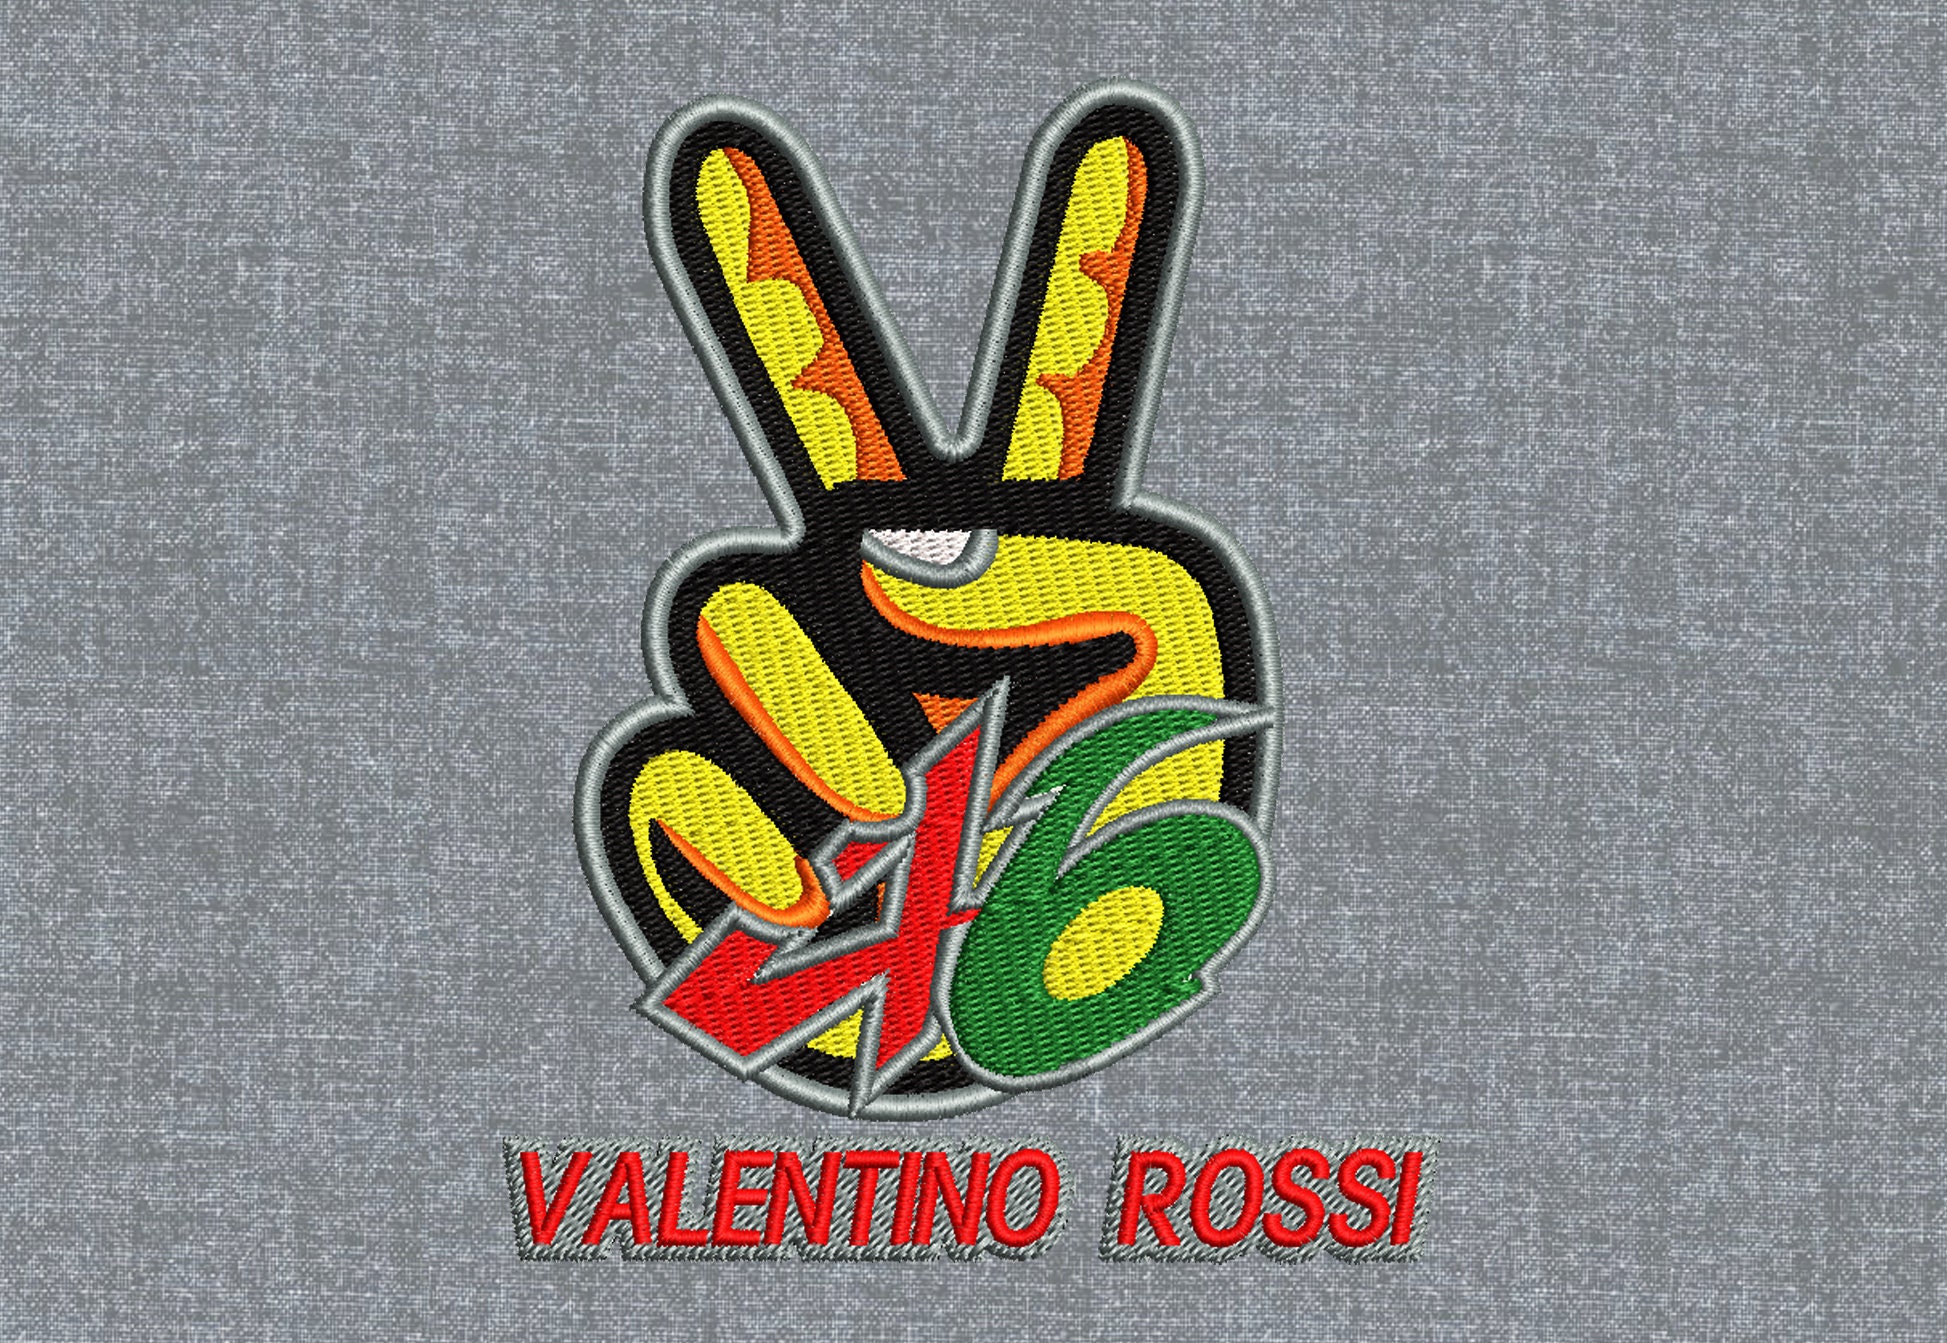 Valentino Rossi Logo Design Pattern 4 - Etsy